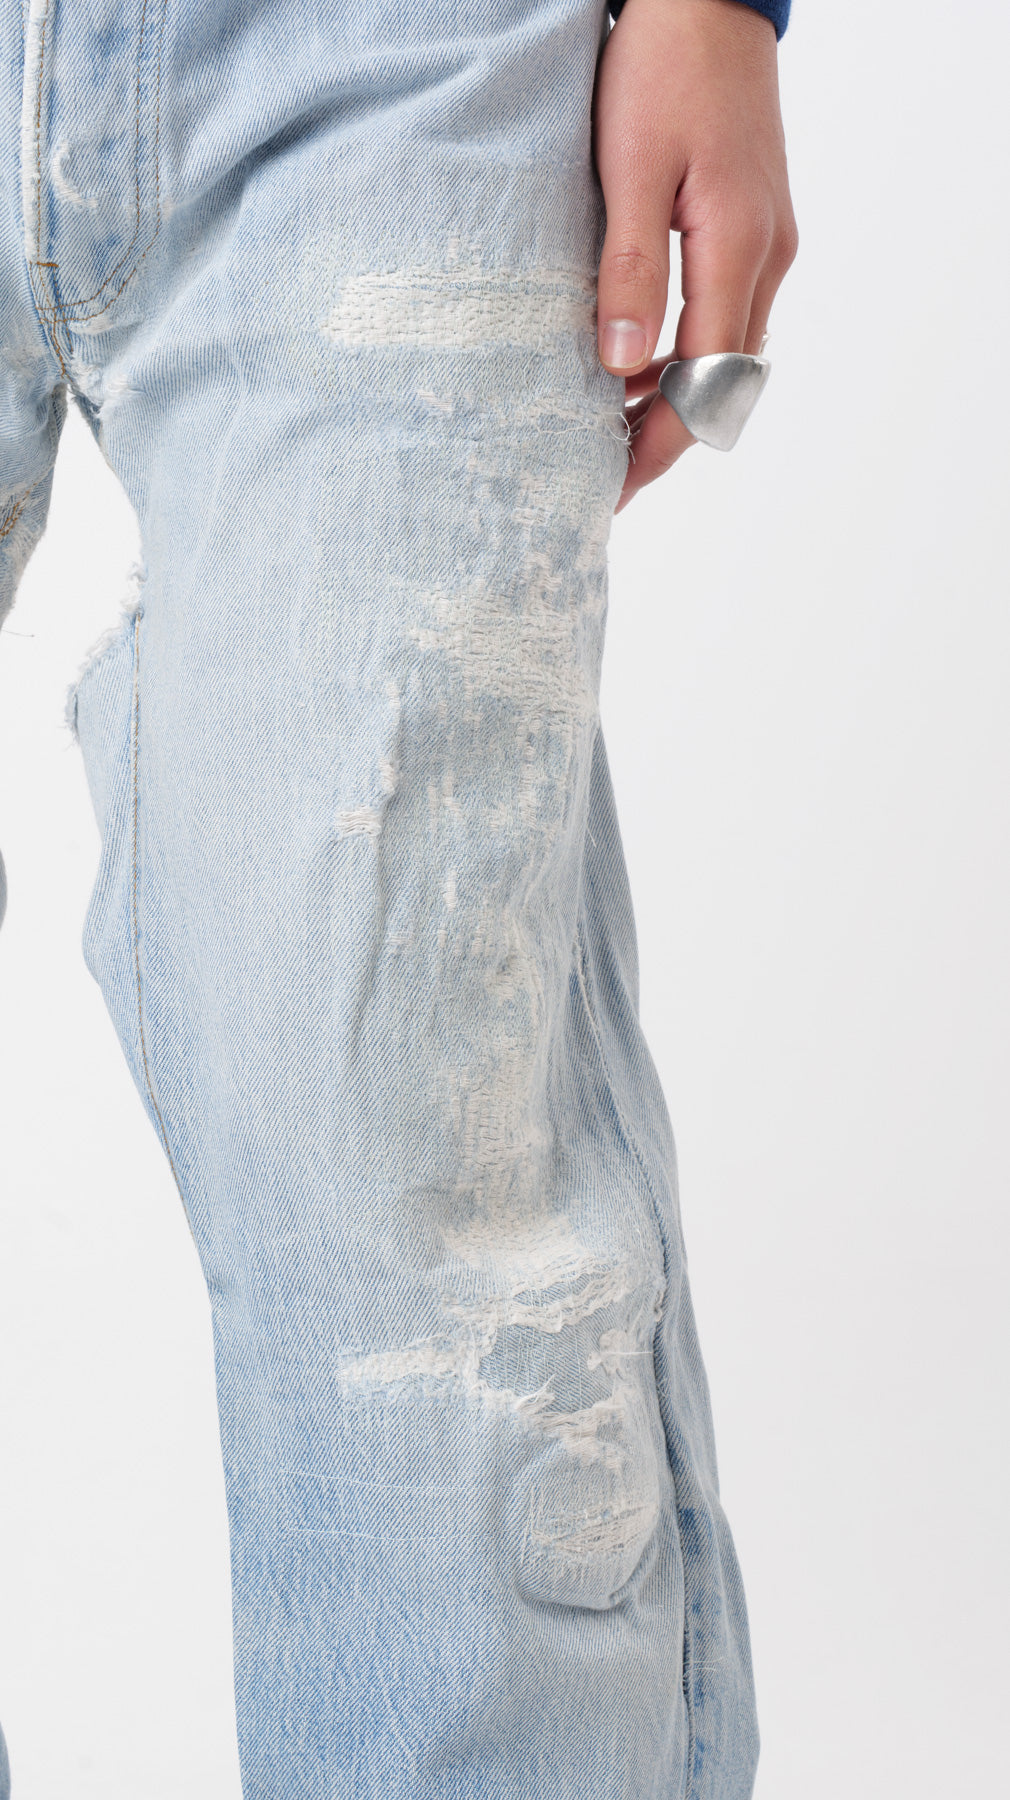 1980s Levi’s Selvedge Redline distressed jeans (w33)